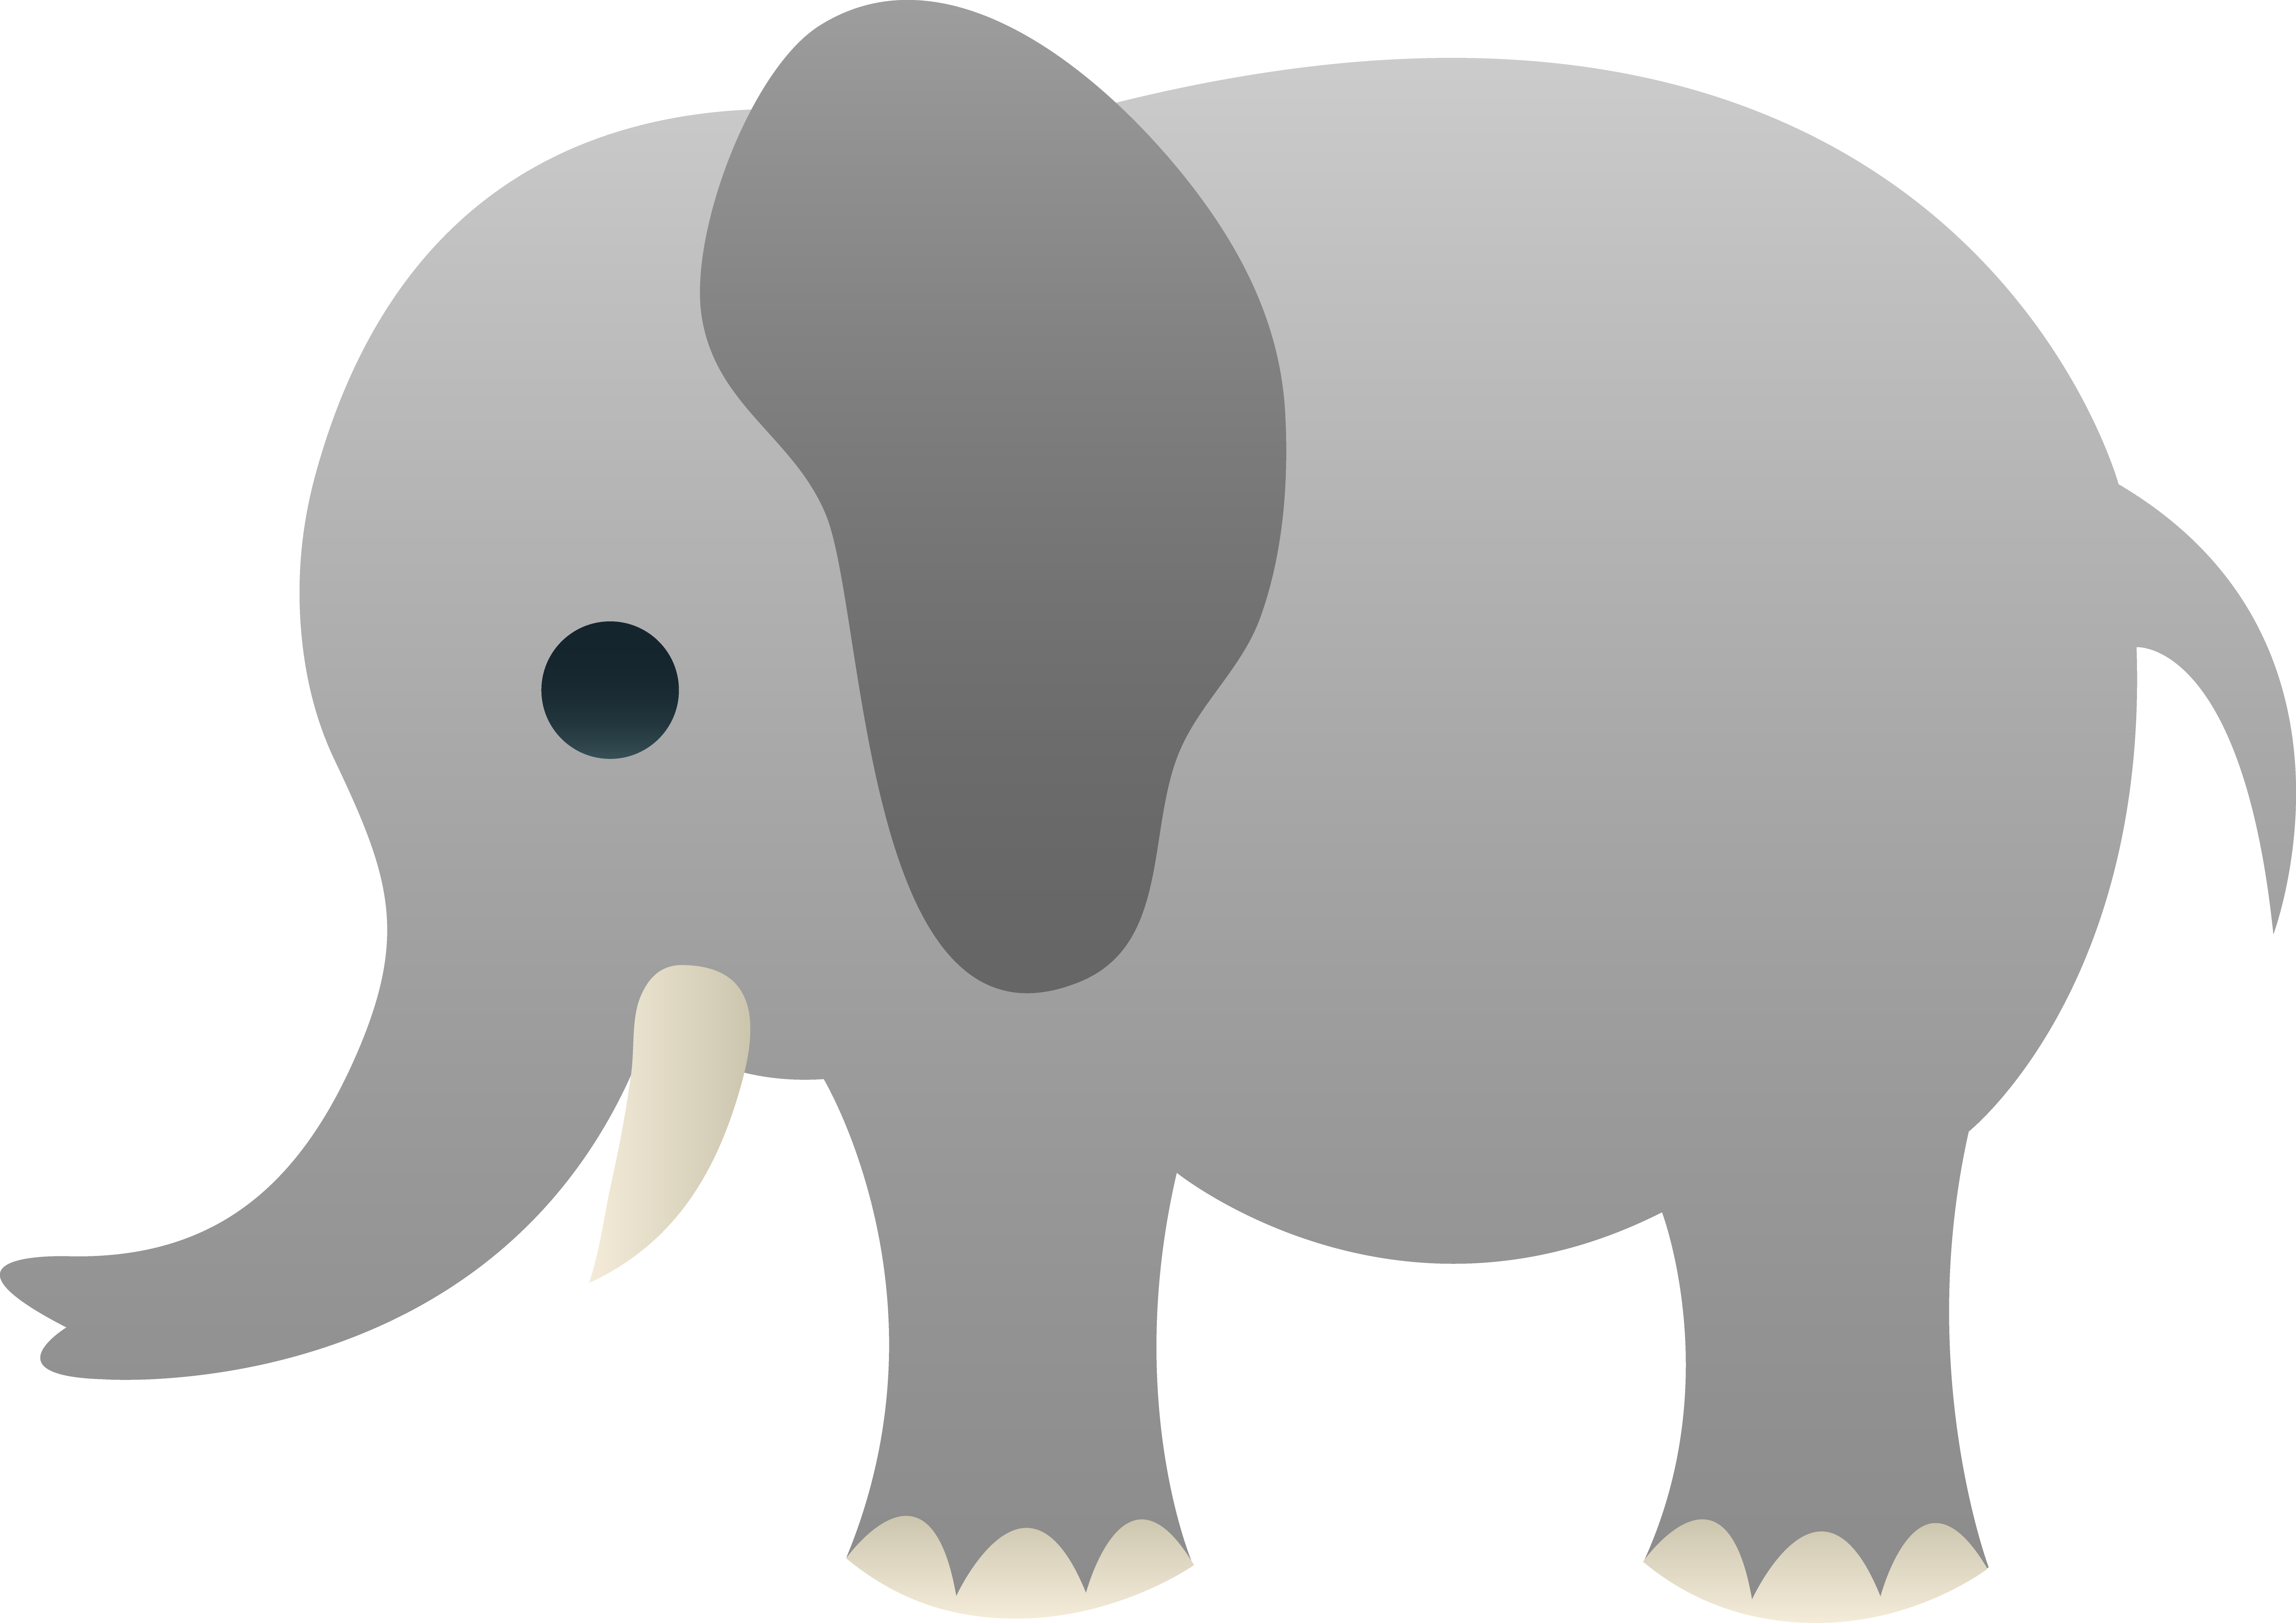 Little gray elephant.